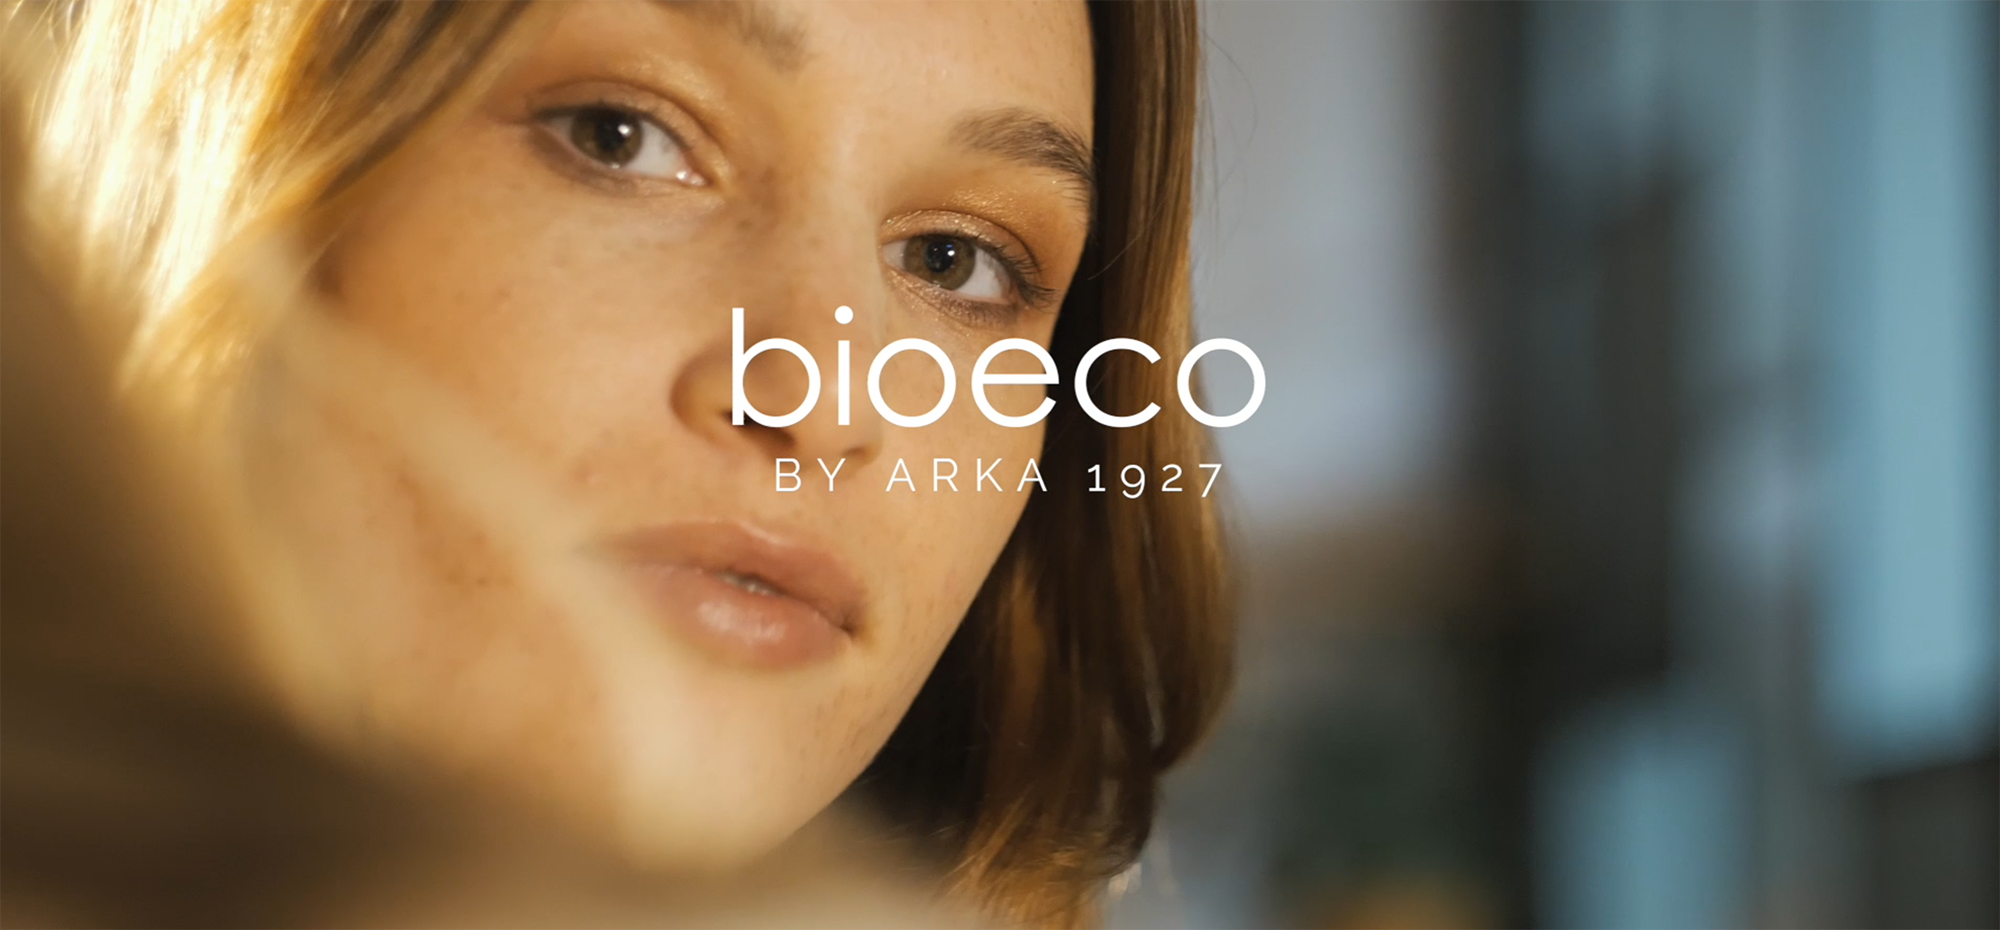 Bioeco by Arka